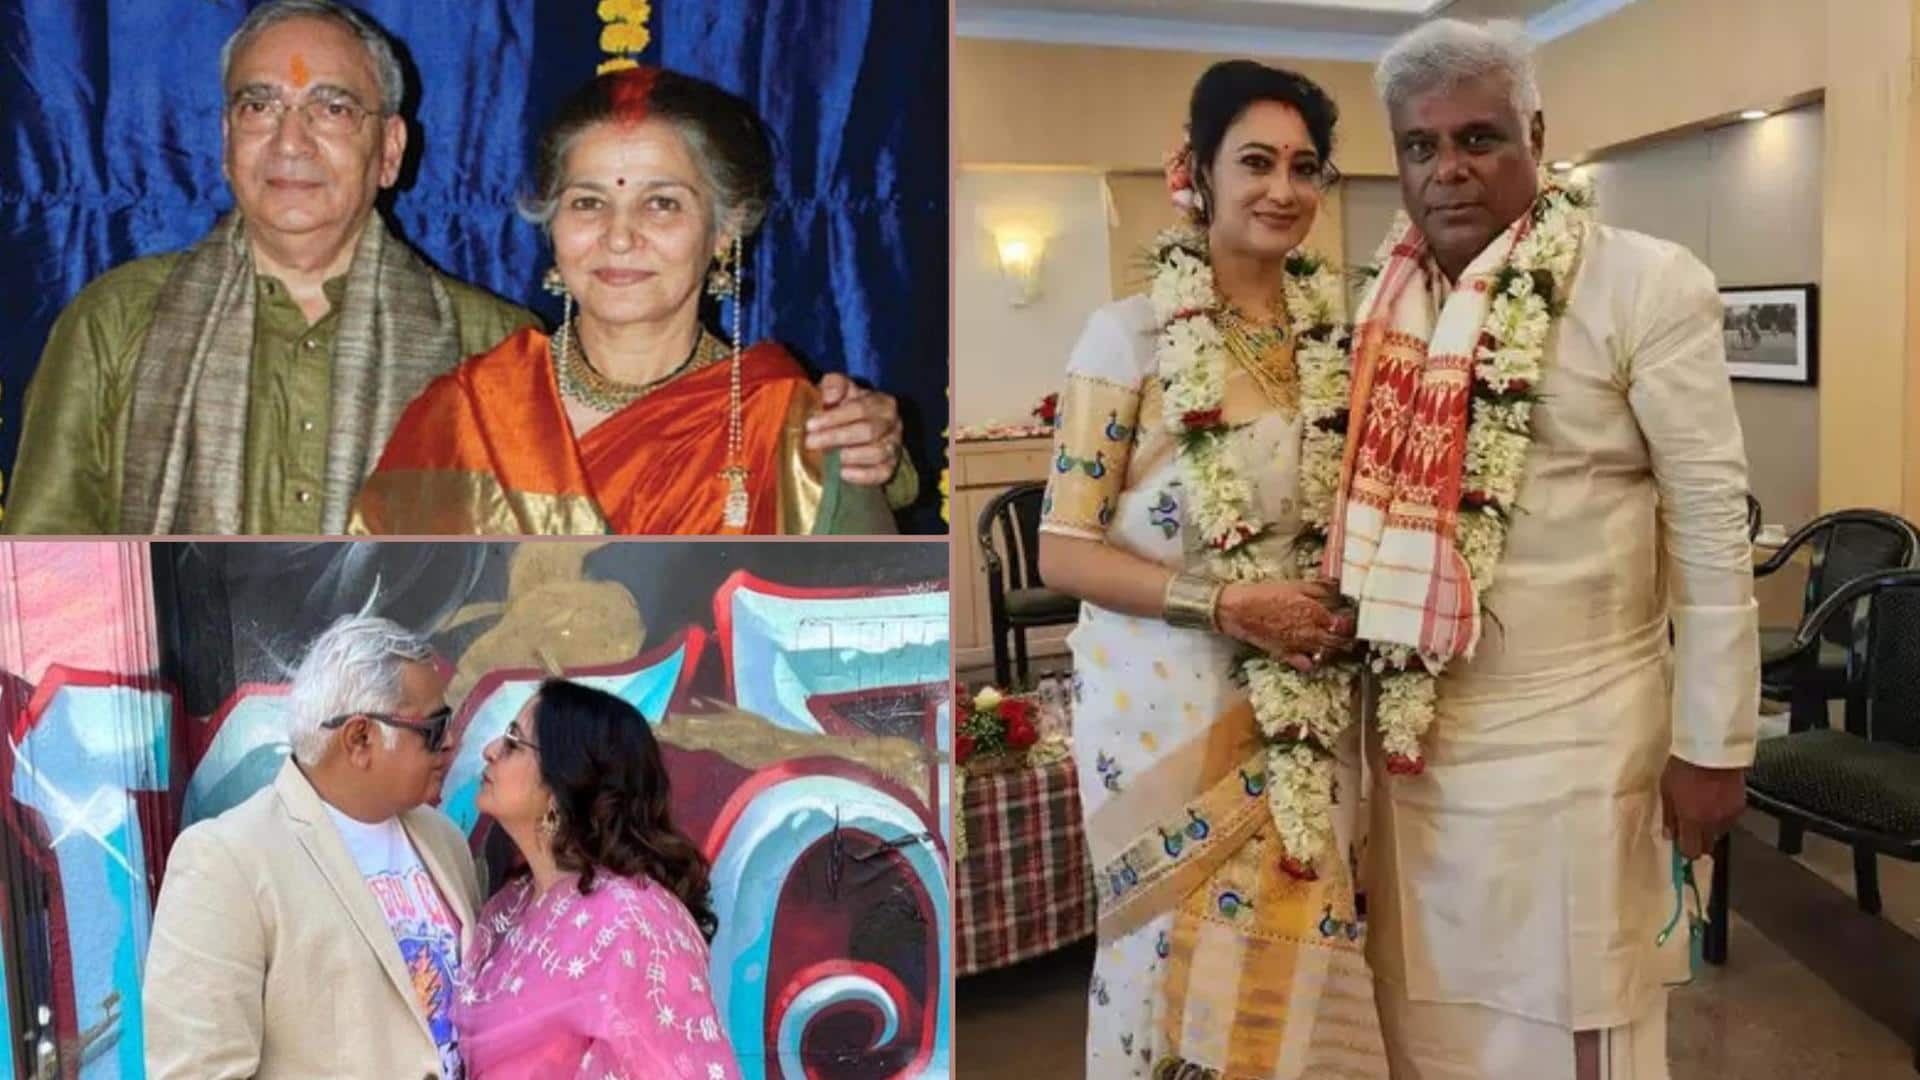 Ashish Vidyarthi marries at 60: Celebrities who broke marriage stereotypes